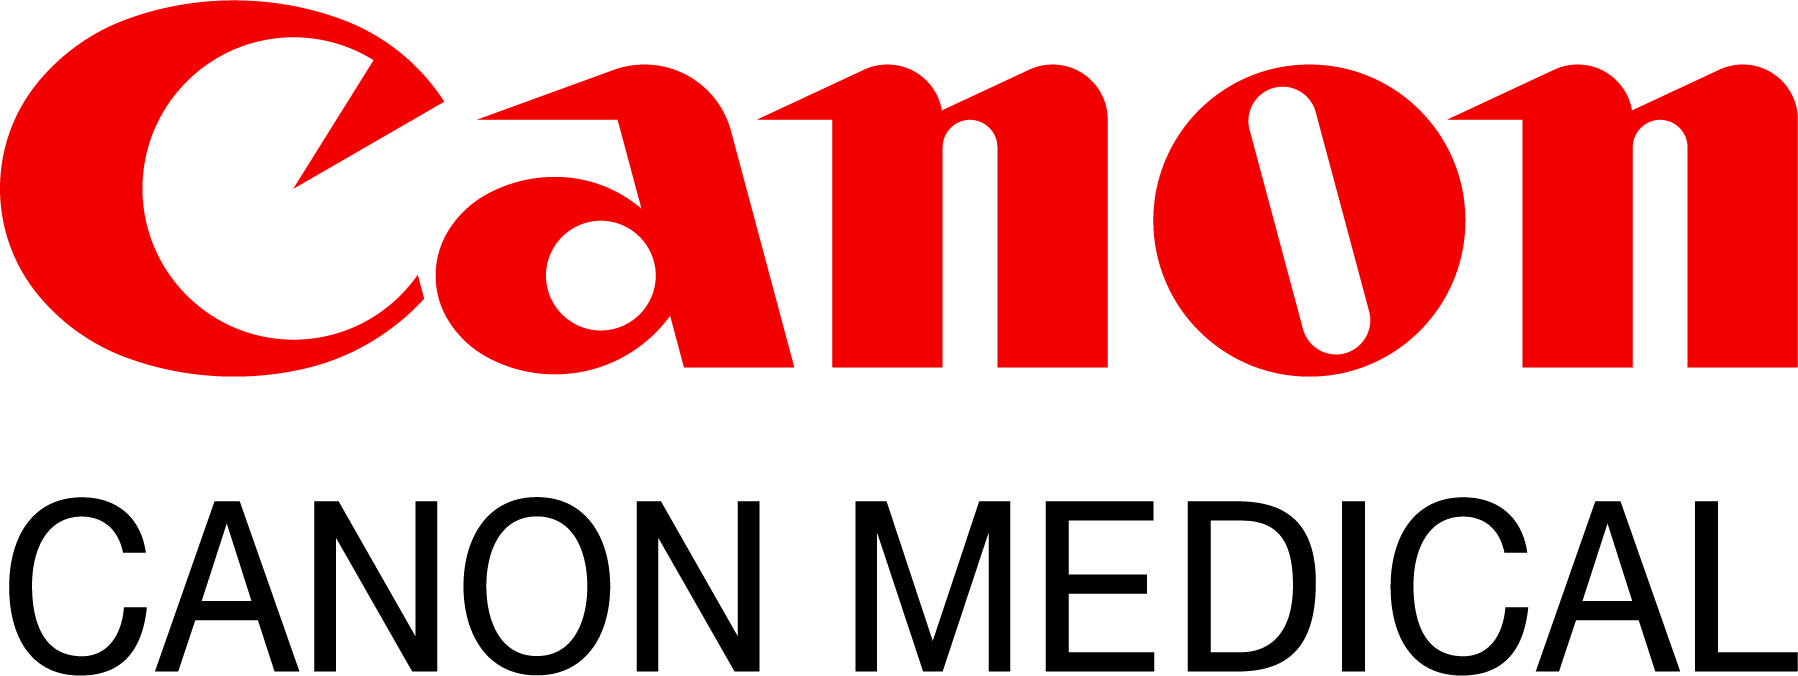 Canon Medical Logo - CanonMedical - Australasian Society for Ultrasound in Medicine